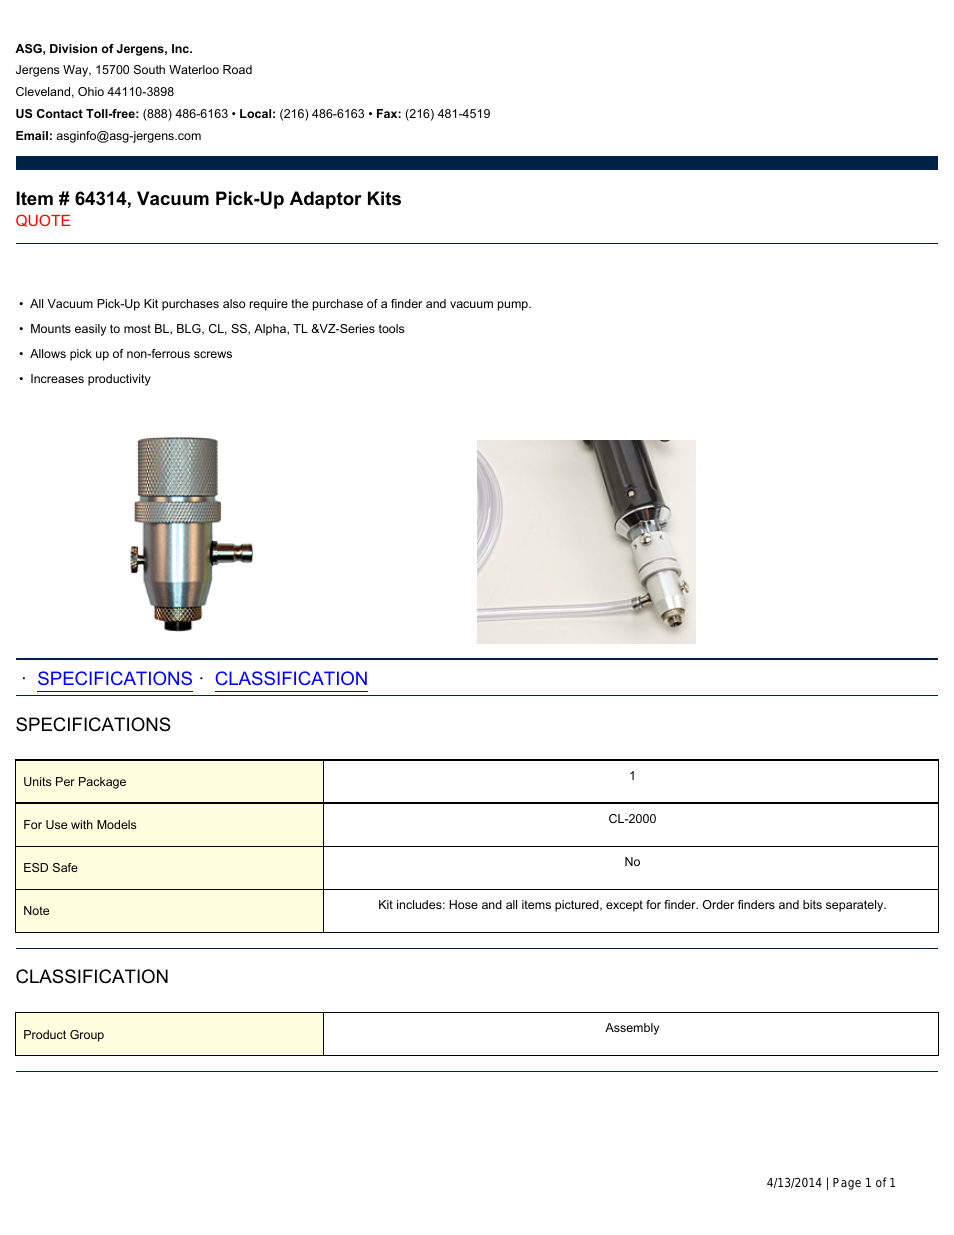 64314 Vacuum Pick-Up Adaptor Kits